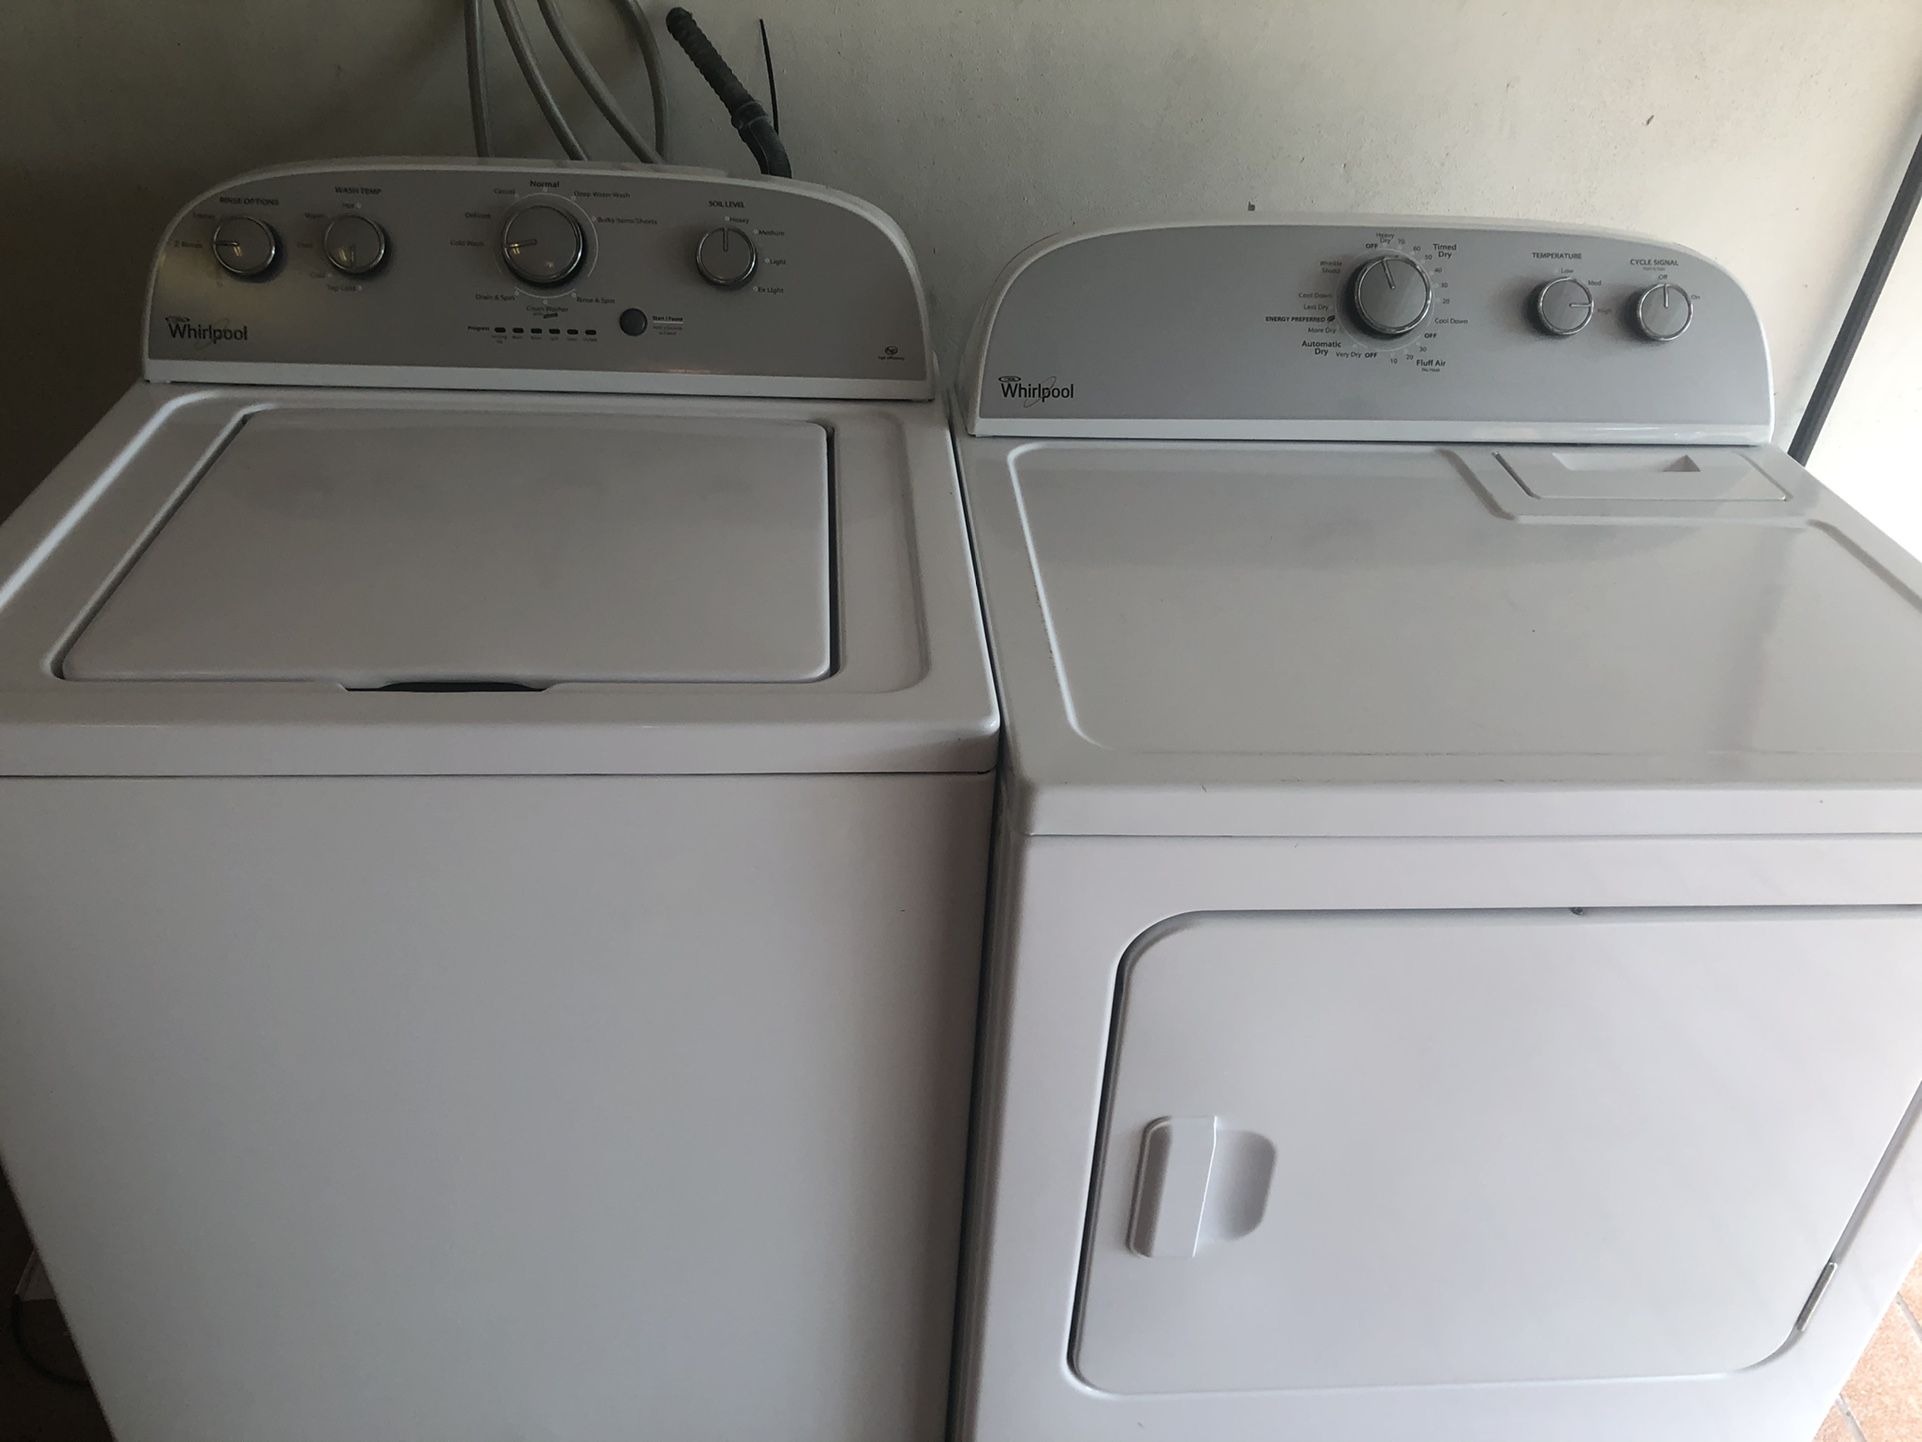 whirlpool washer model wtw4815ew1 And Dryer